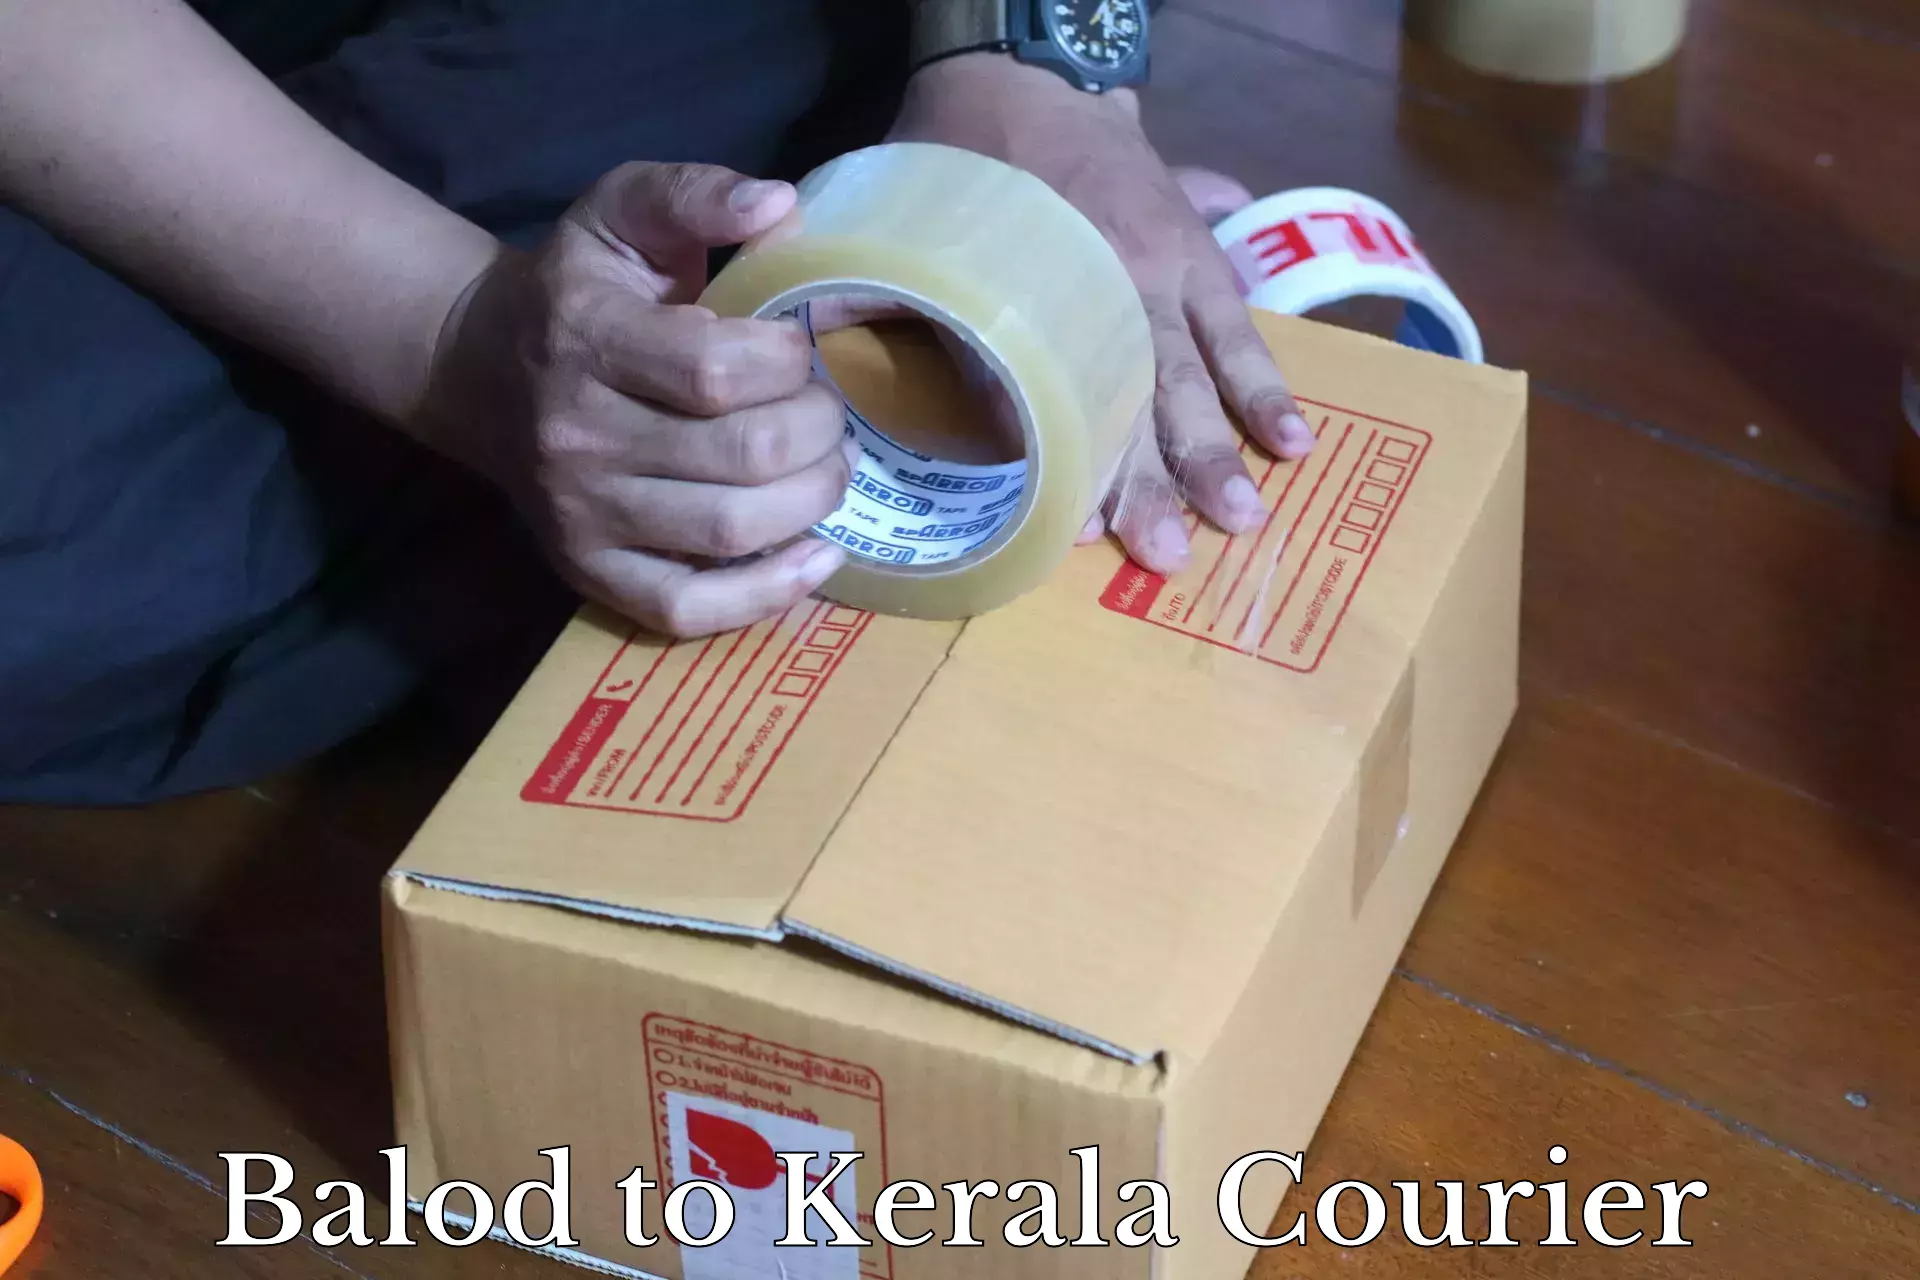 Affordable parcel service Balod to Kerala